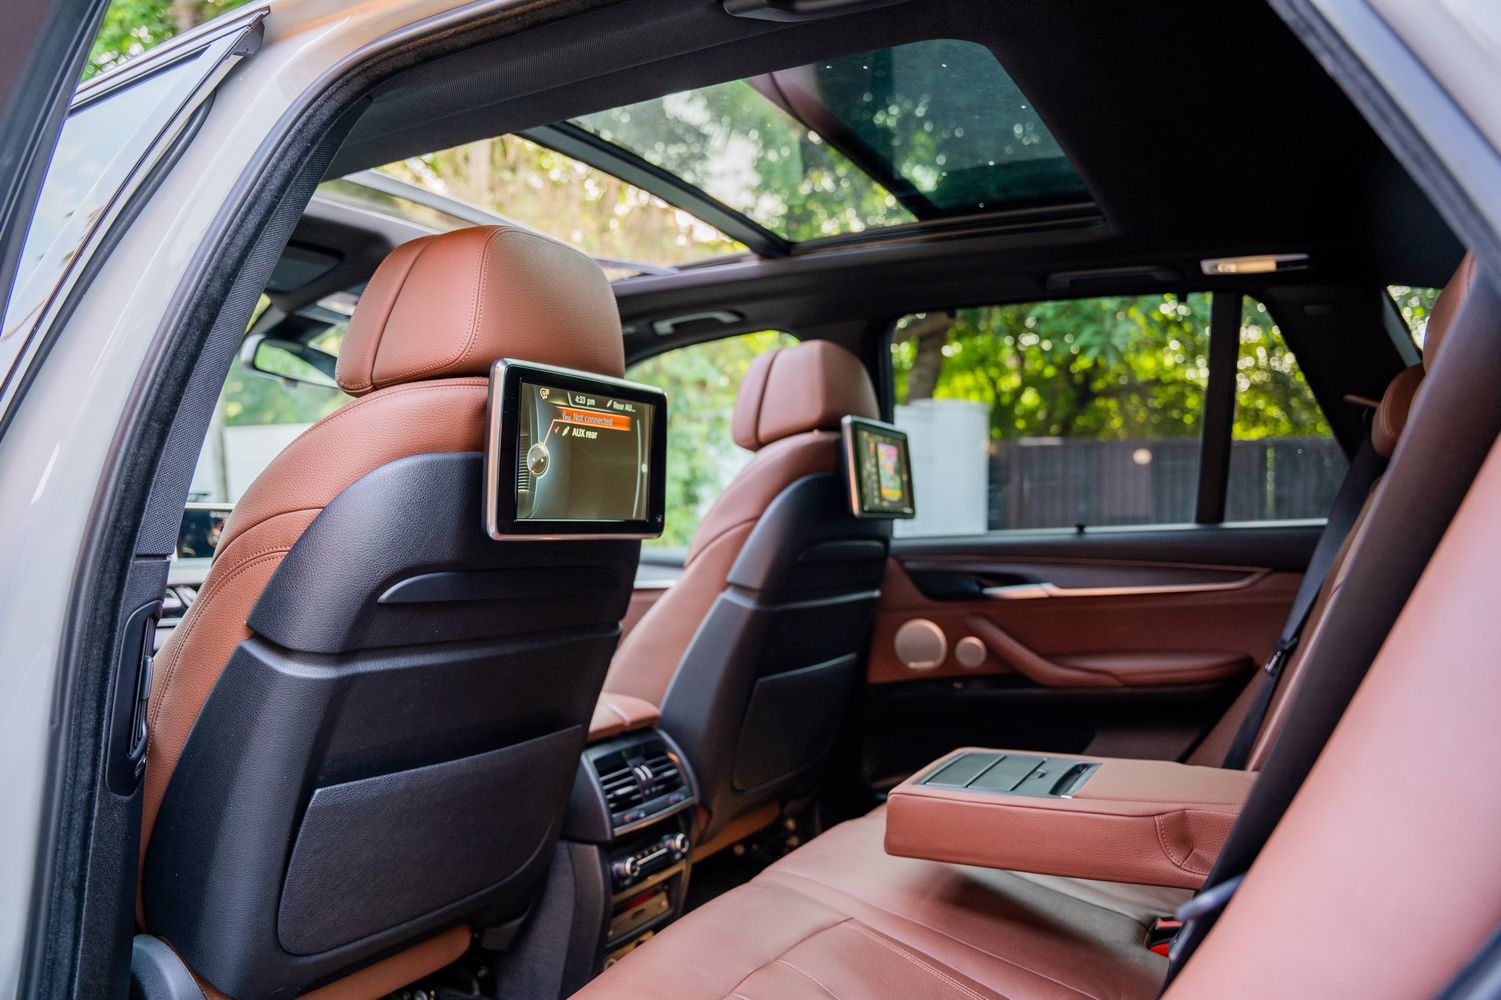 BMW X5 back interior